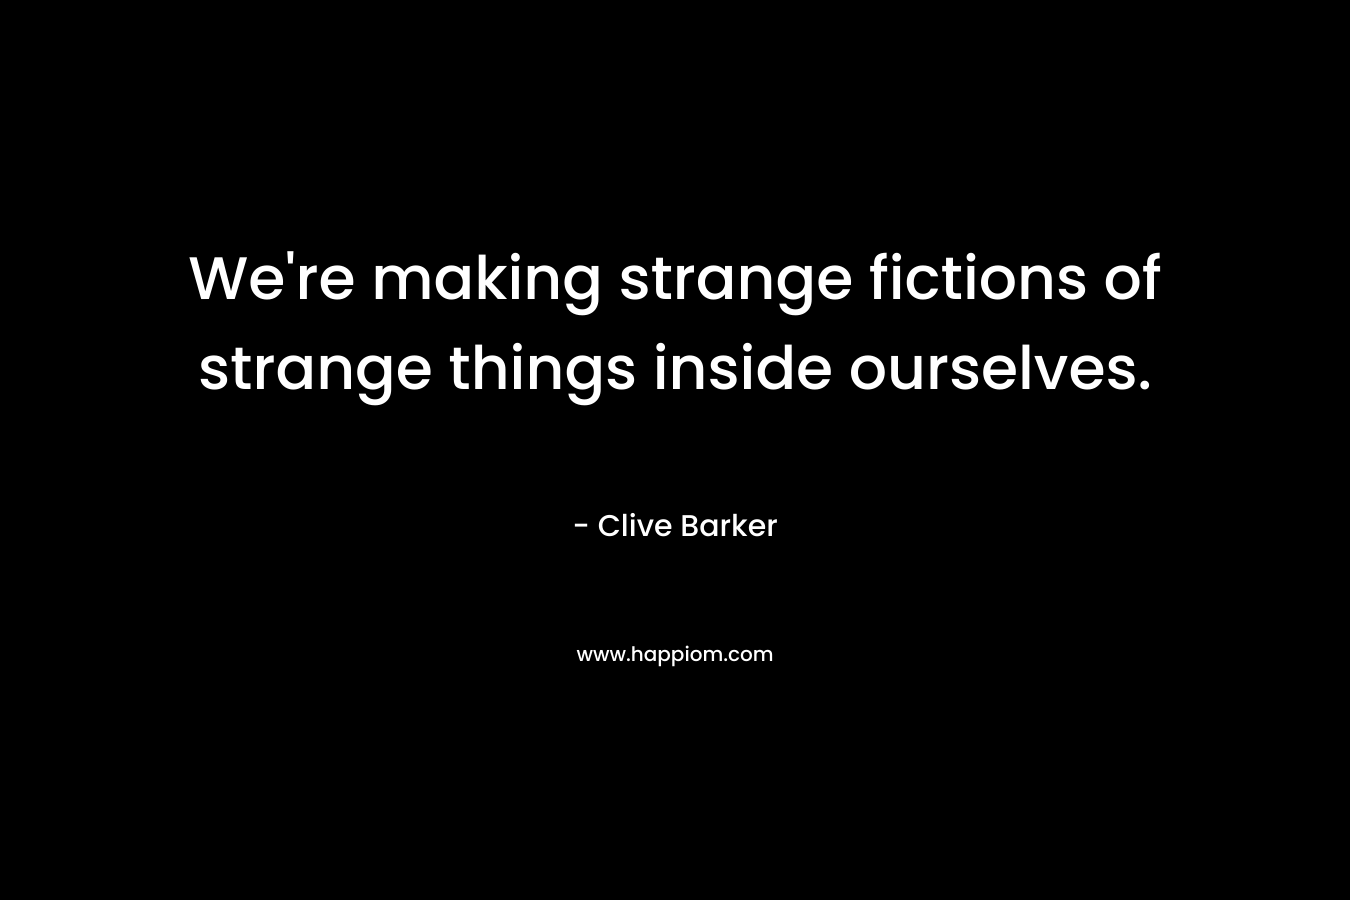 We're making strange fictions of strange things inside ourselves.